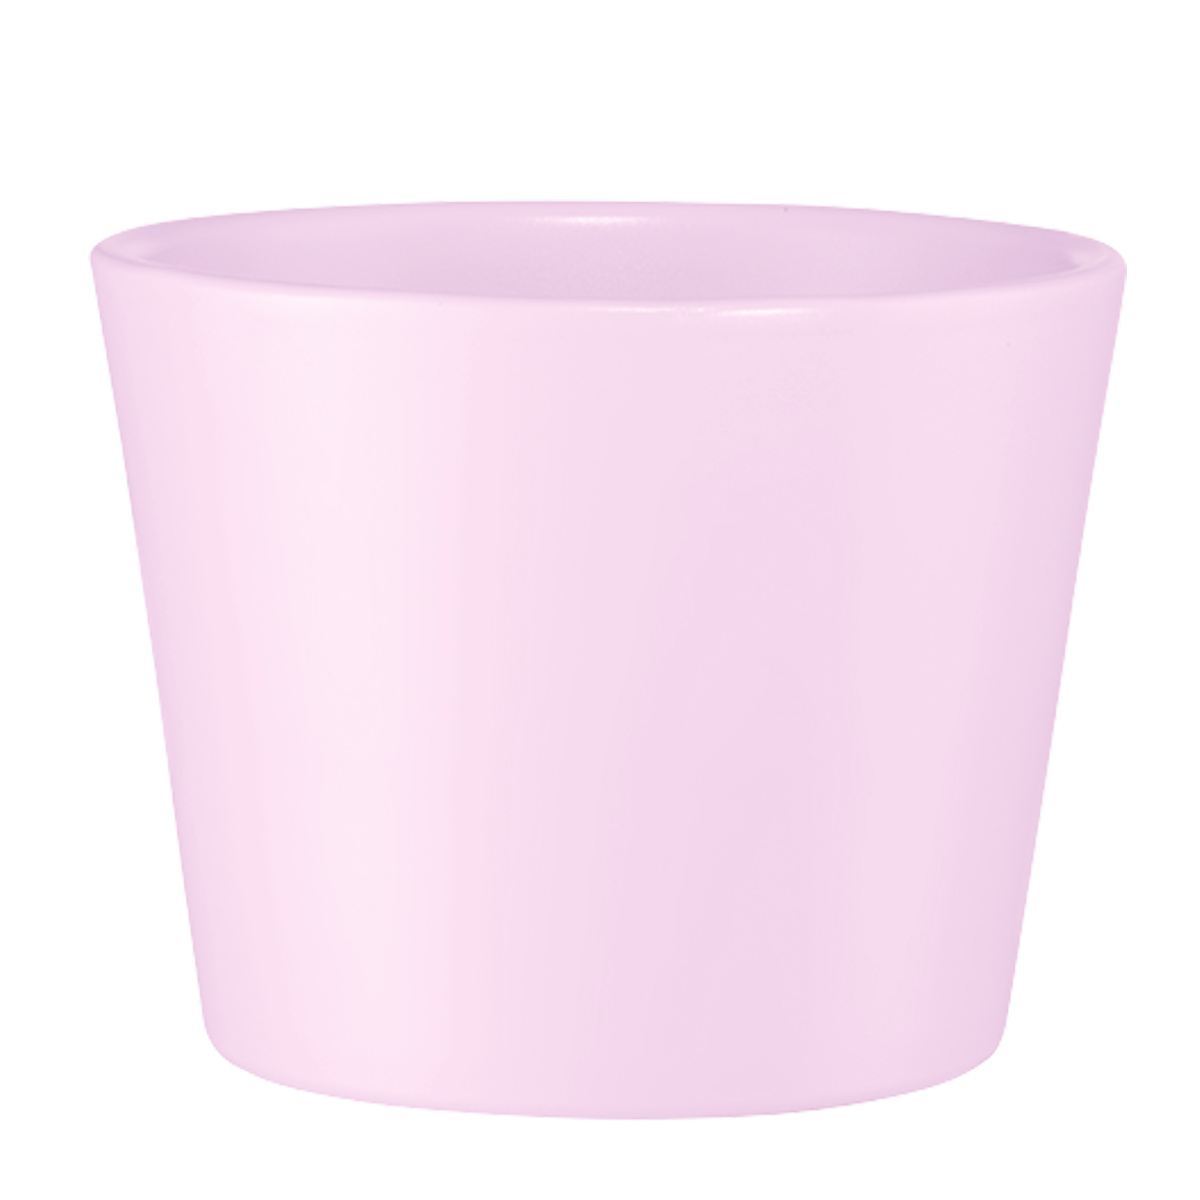 Orchideen Topf Keramik 14 cm Farbe rosa matt  der Serie 181 von Griebling Keramik